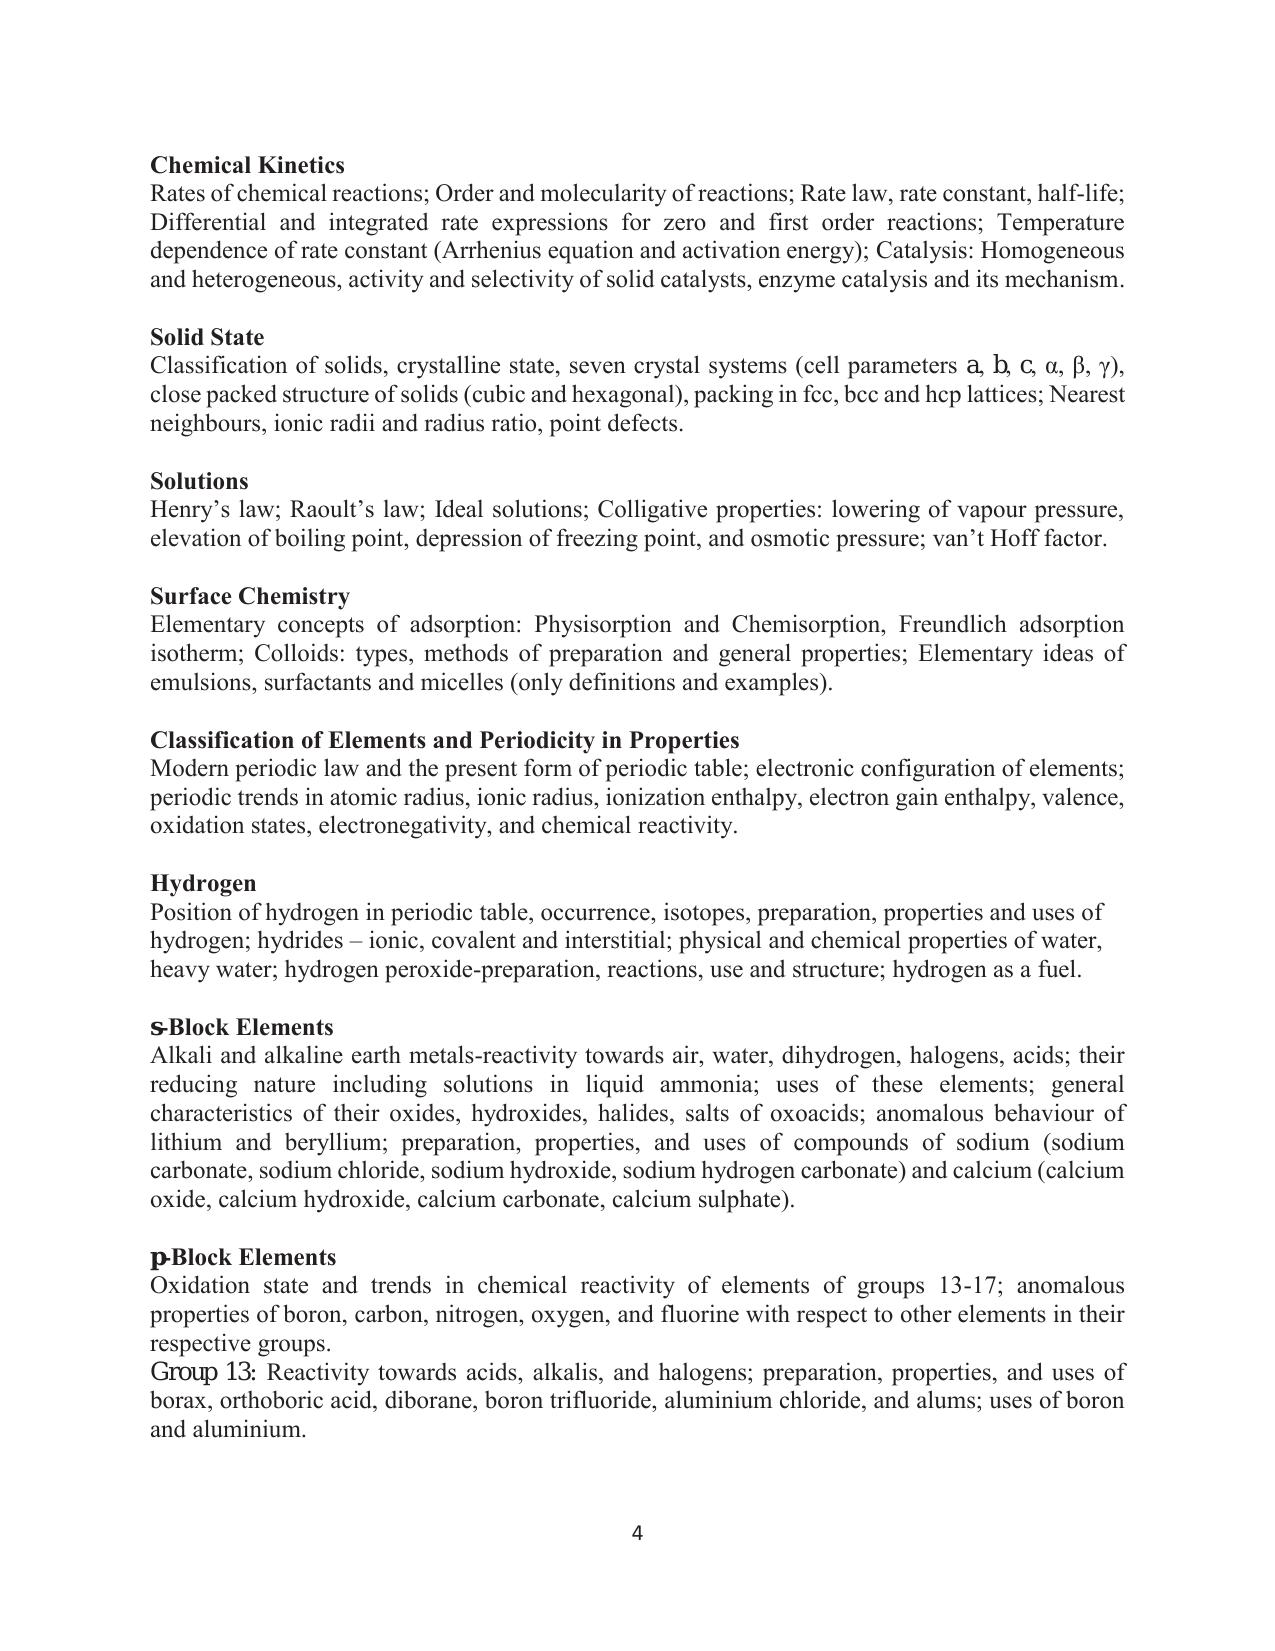 JEE Advanced Syllabus - Page 4